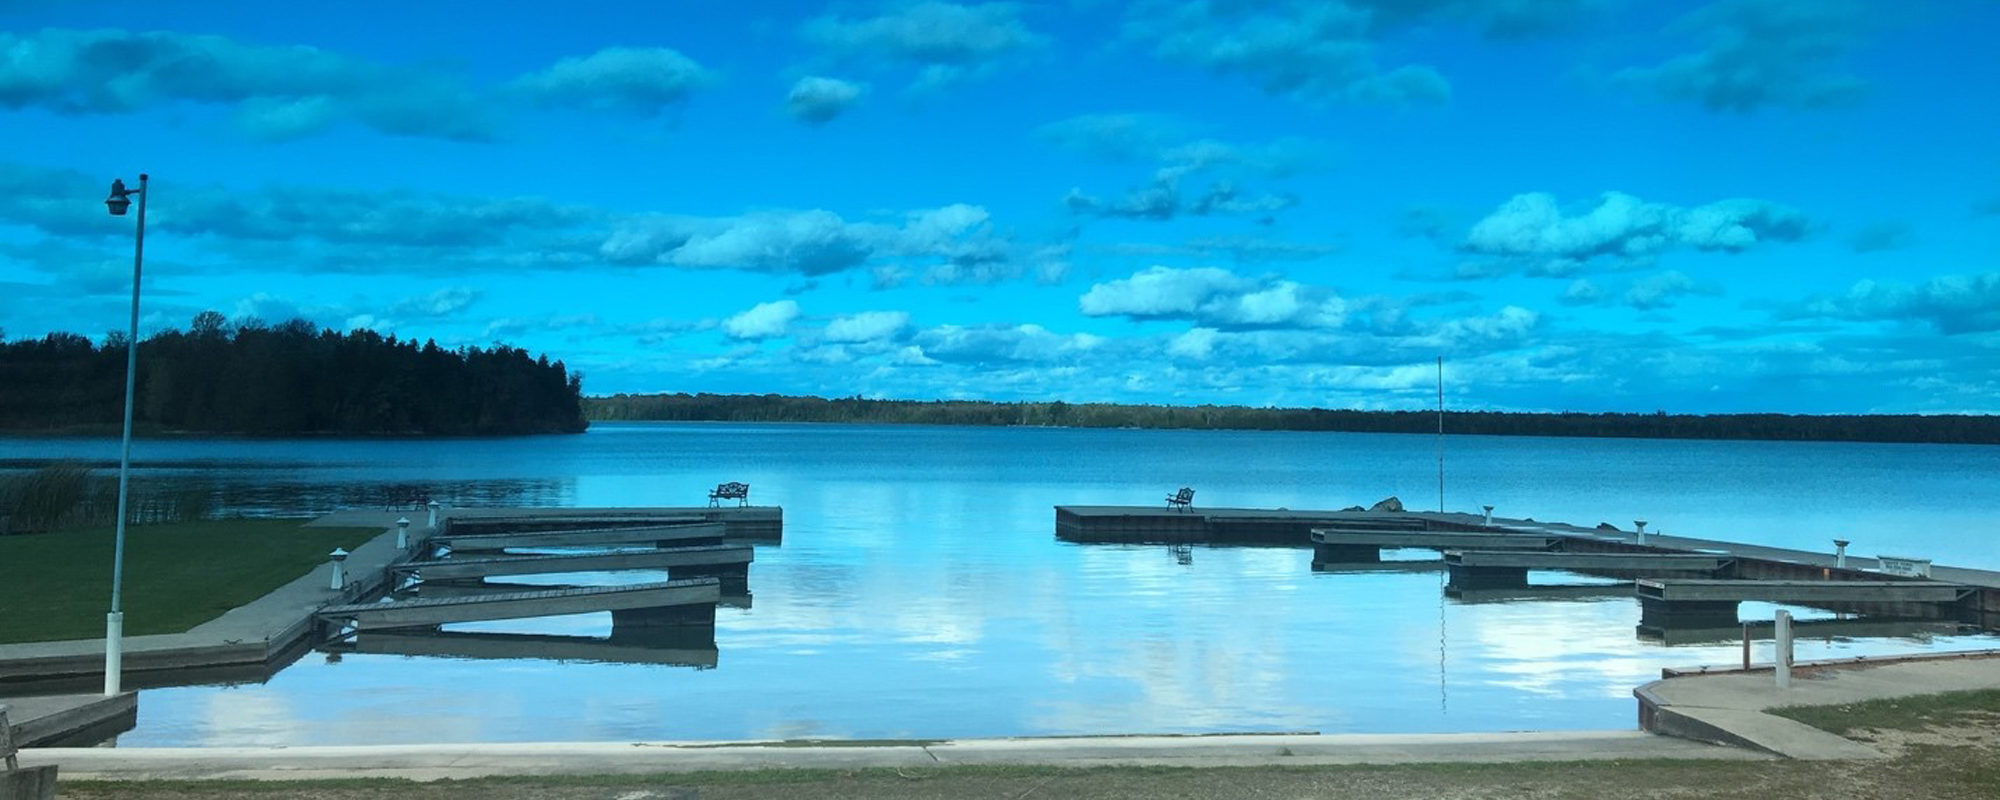 Peaceful Blue Lake